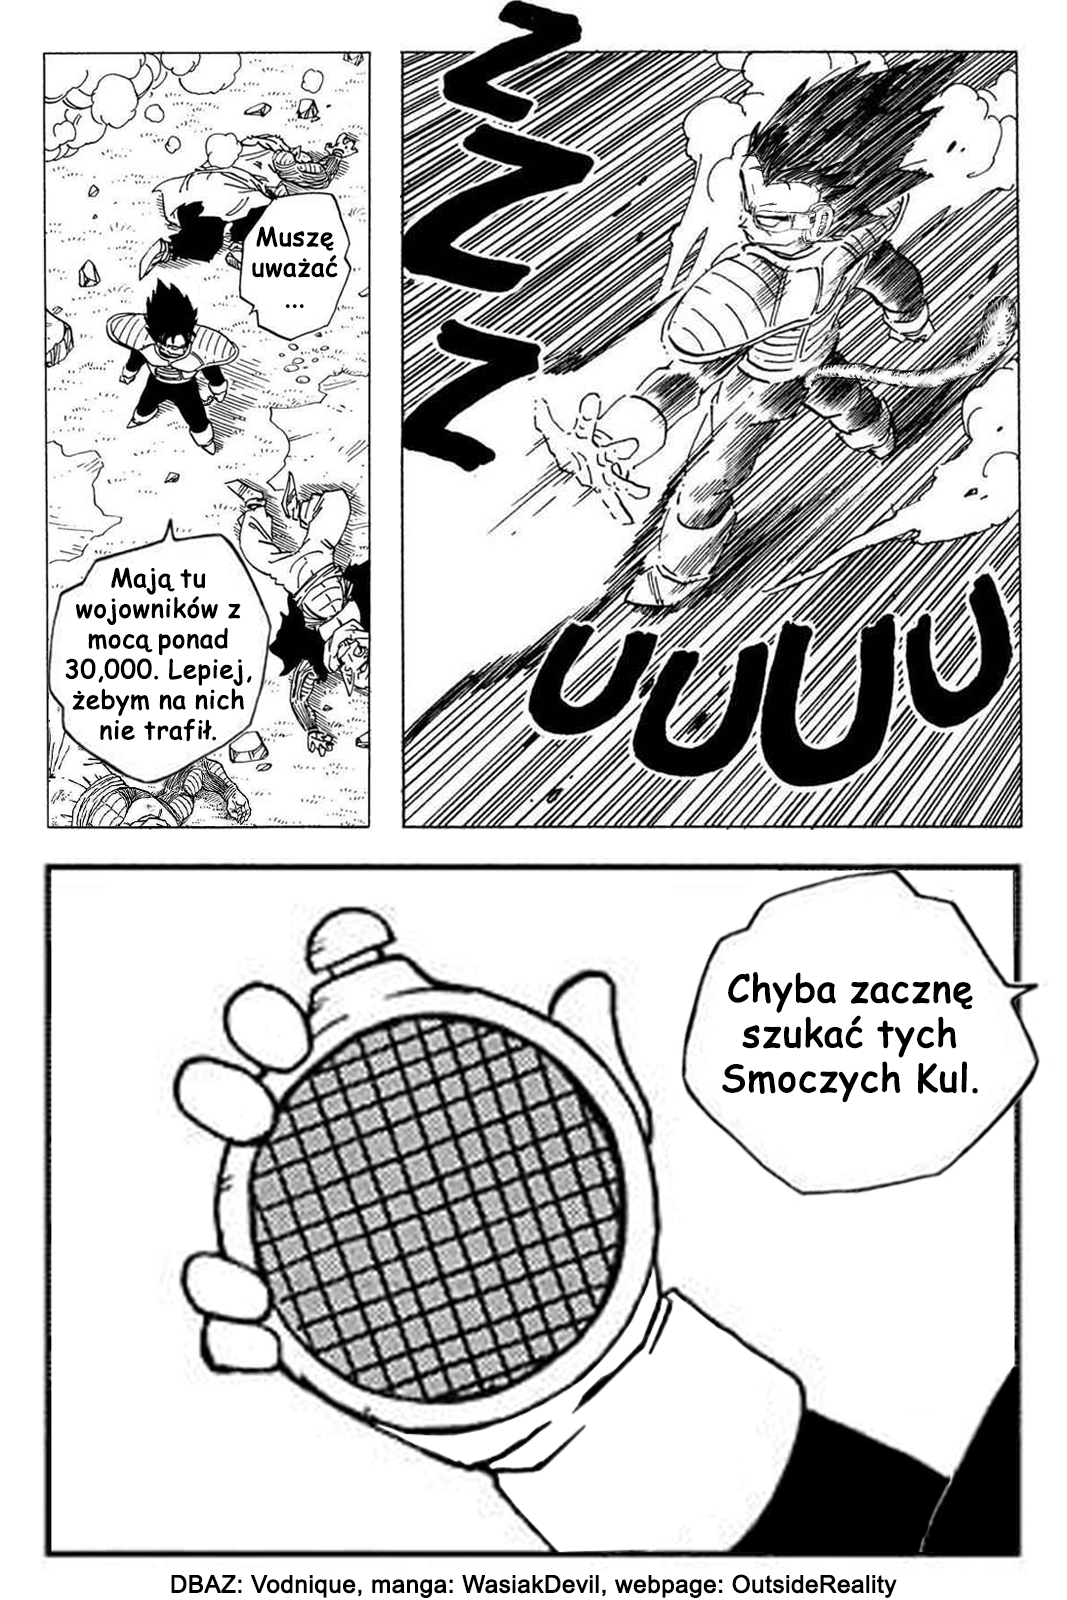 Manga DBAZ - I - 004 (WasiakDevil)